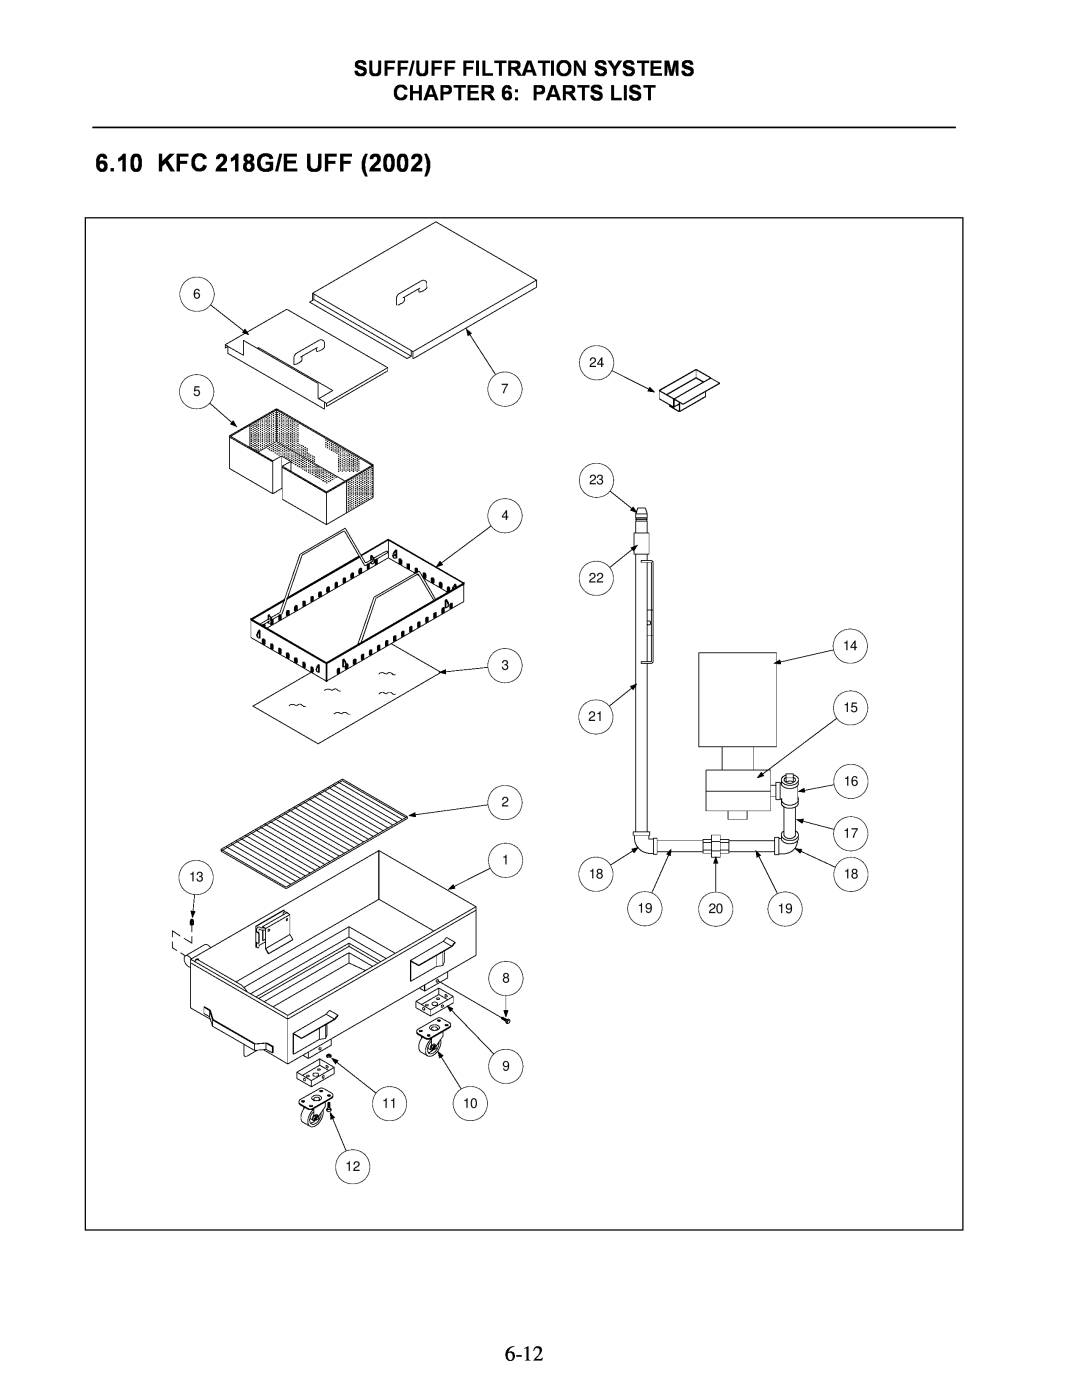 Frymaster Under Fryer Filter (UFF) operation manual KFC 218G/E UFF, Suff/Uff Filtration Systems : Parts List 